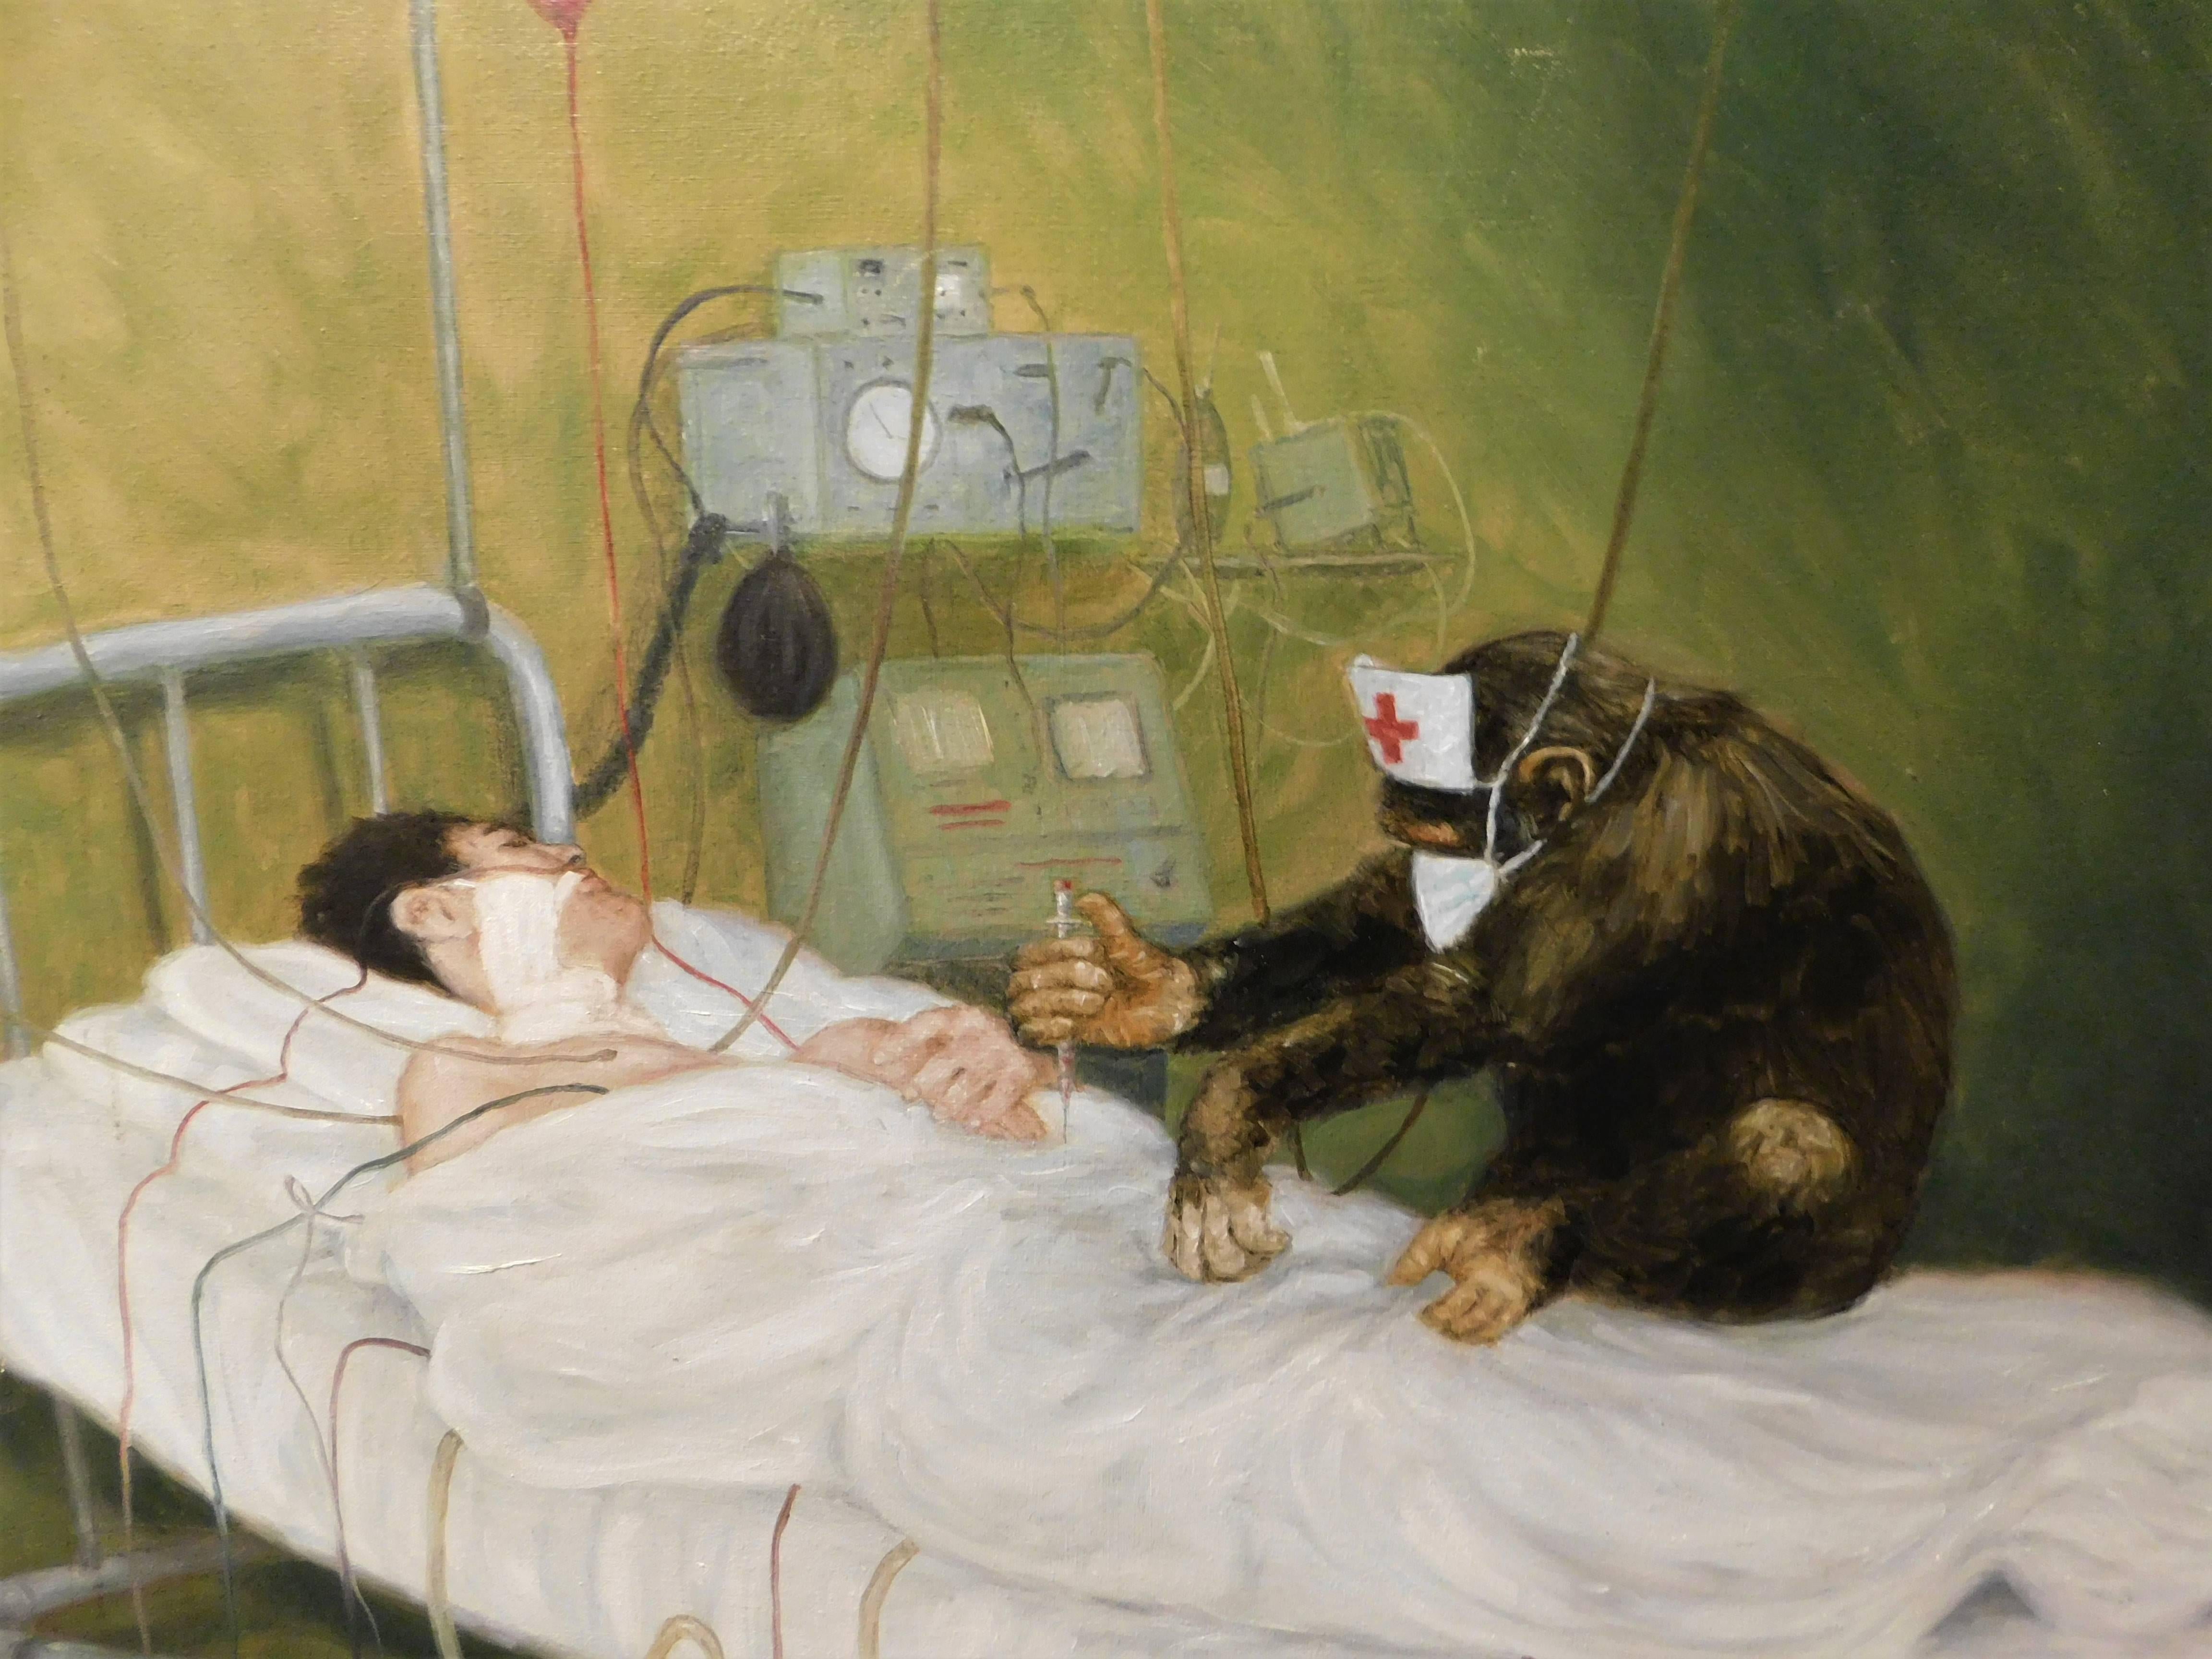 monkey in hospital bed